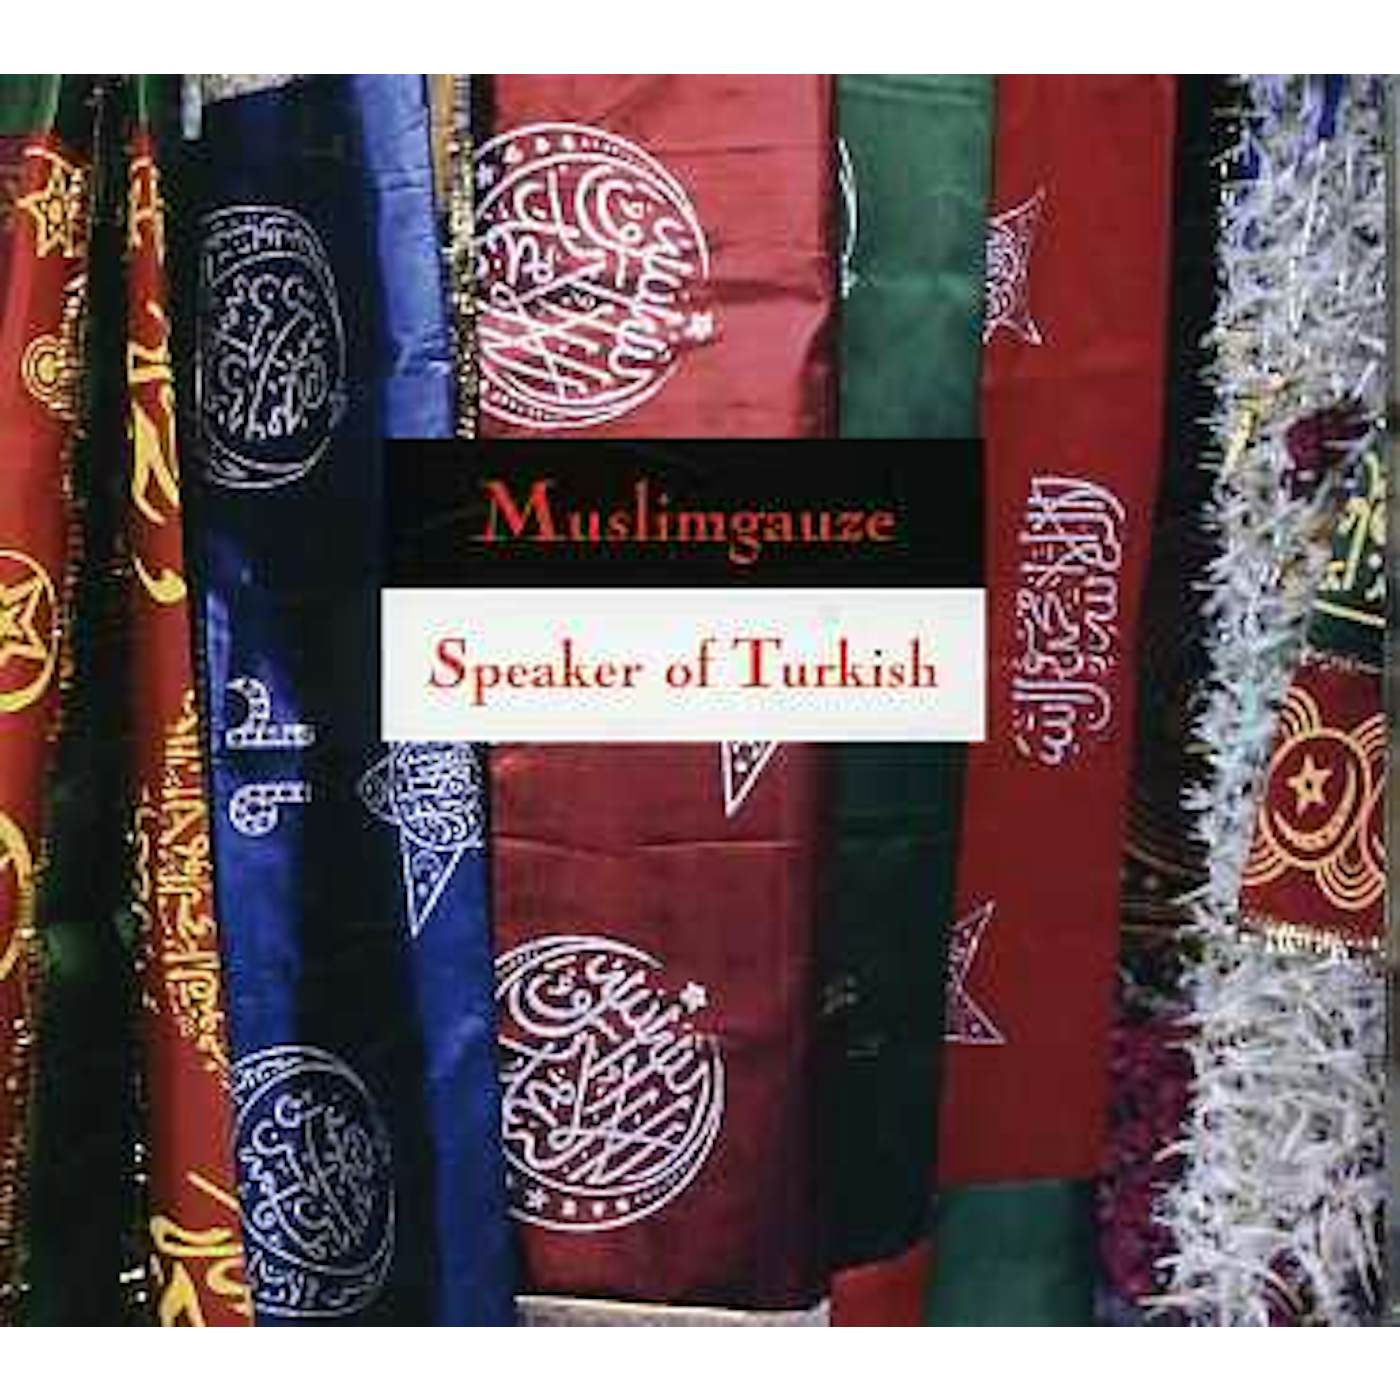 Muslimgauze SPEAKER OF TURKISH CD